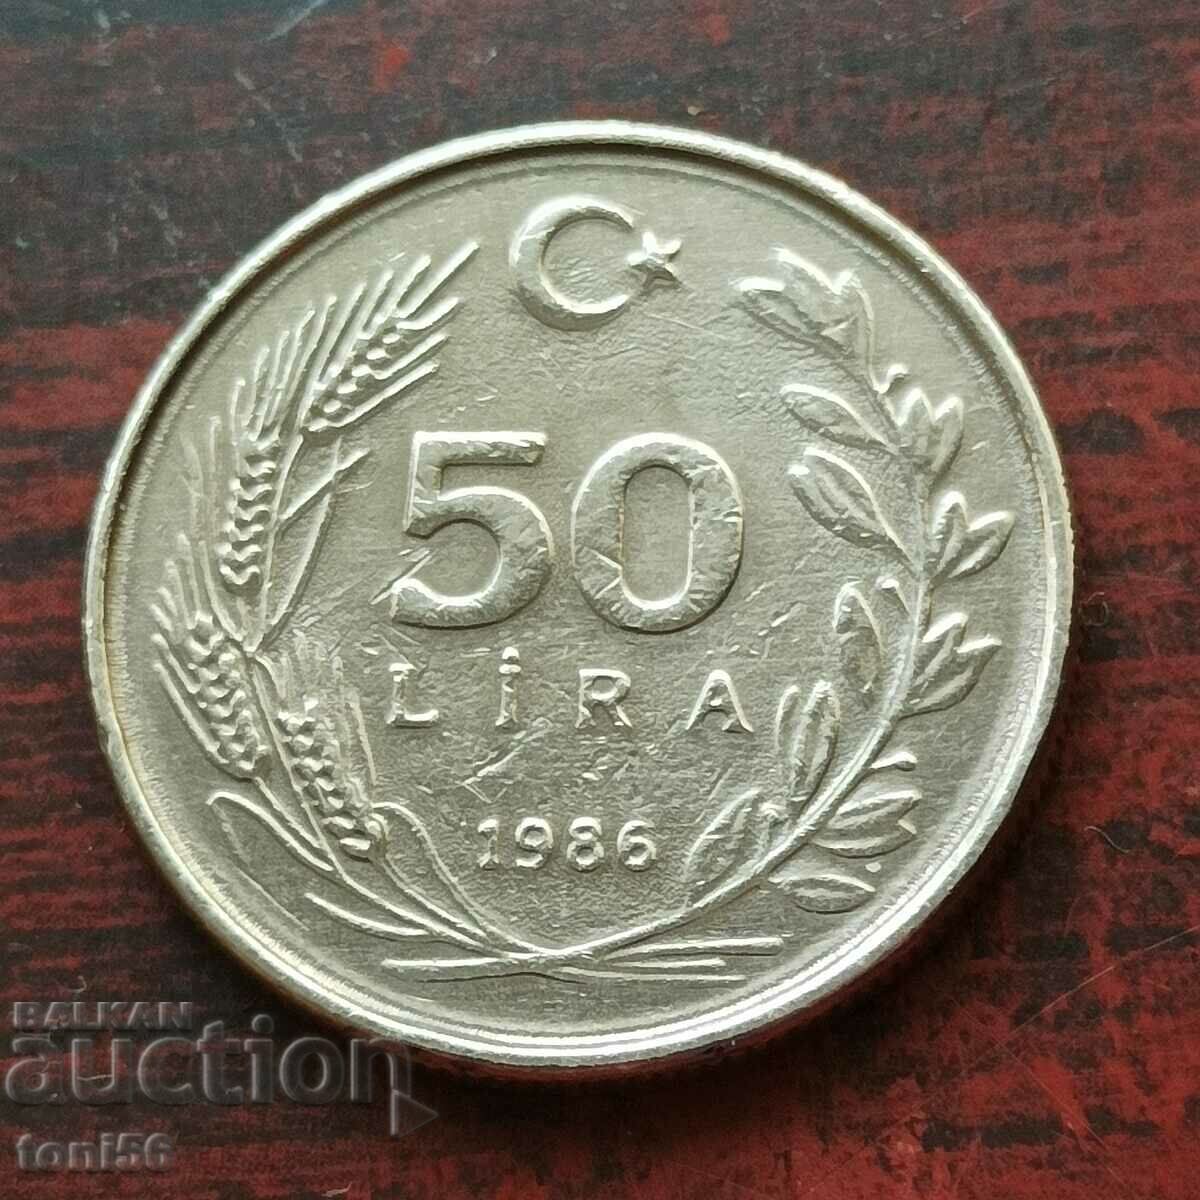 Turcia 50 lire 1986